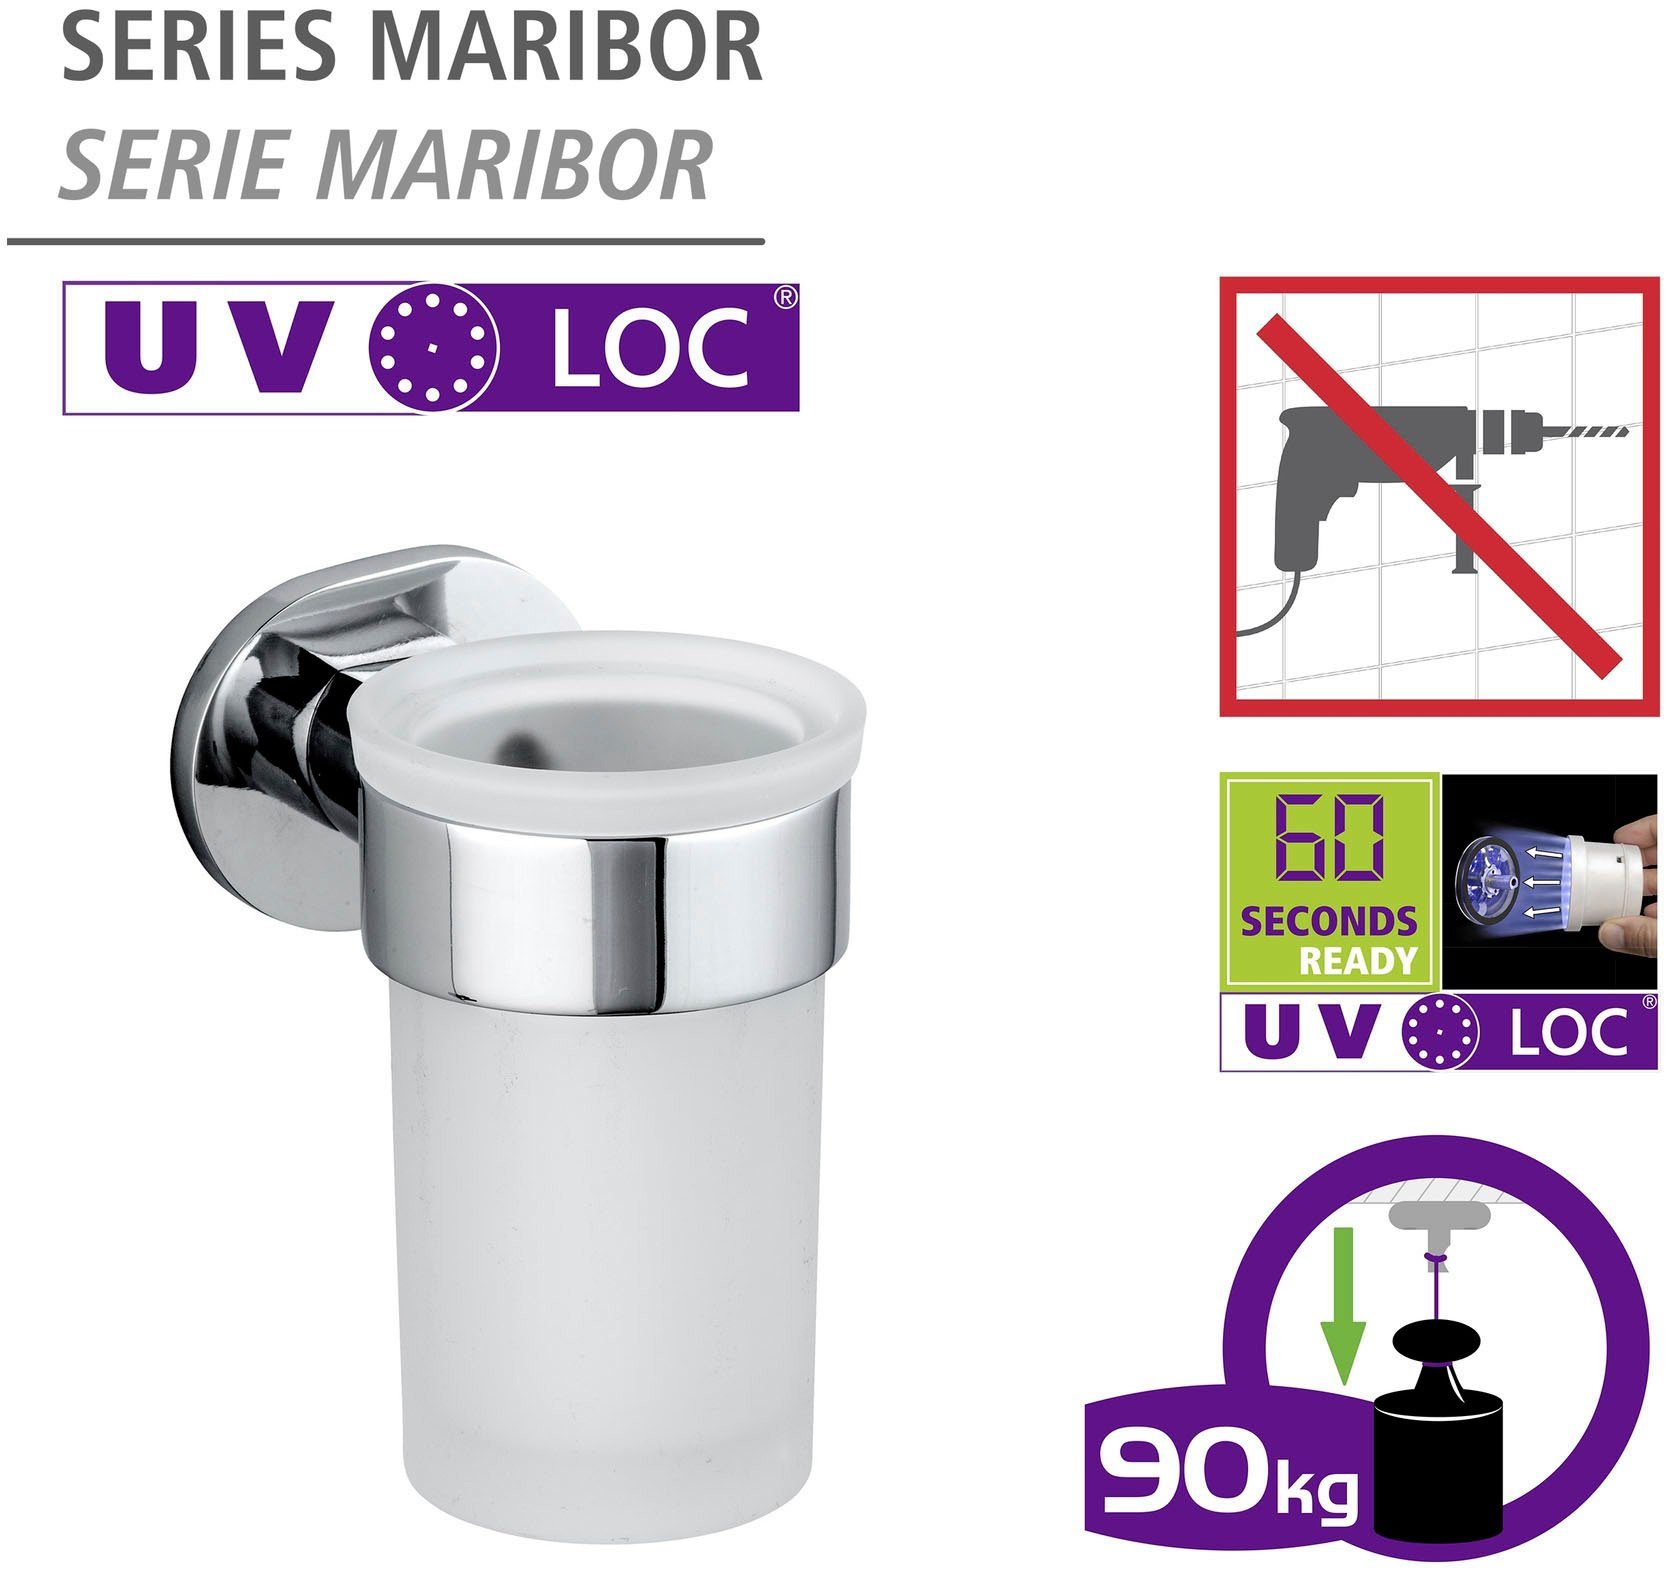 WENKO Zahnputzbecher UV-Loc® mit Maribor, innovativem Bohren ohne Klebesystem befestigen